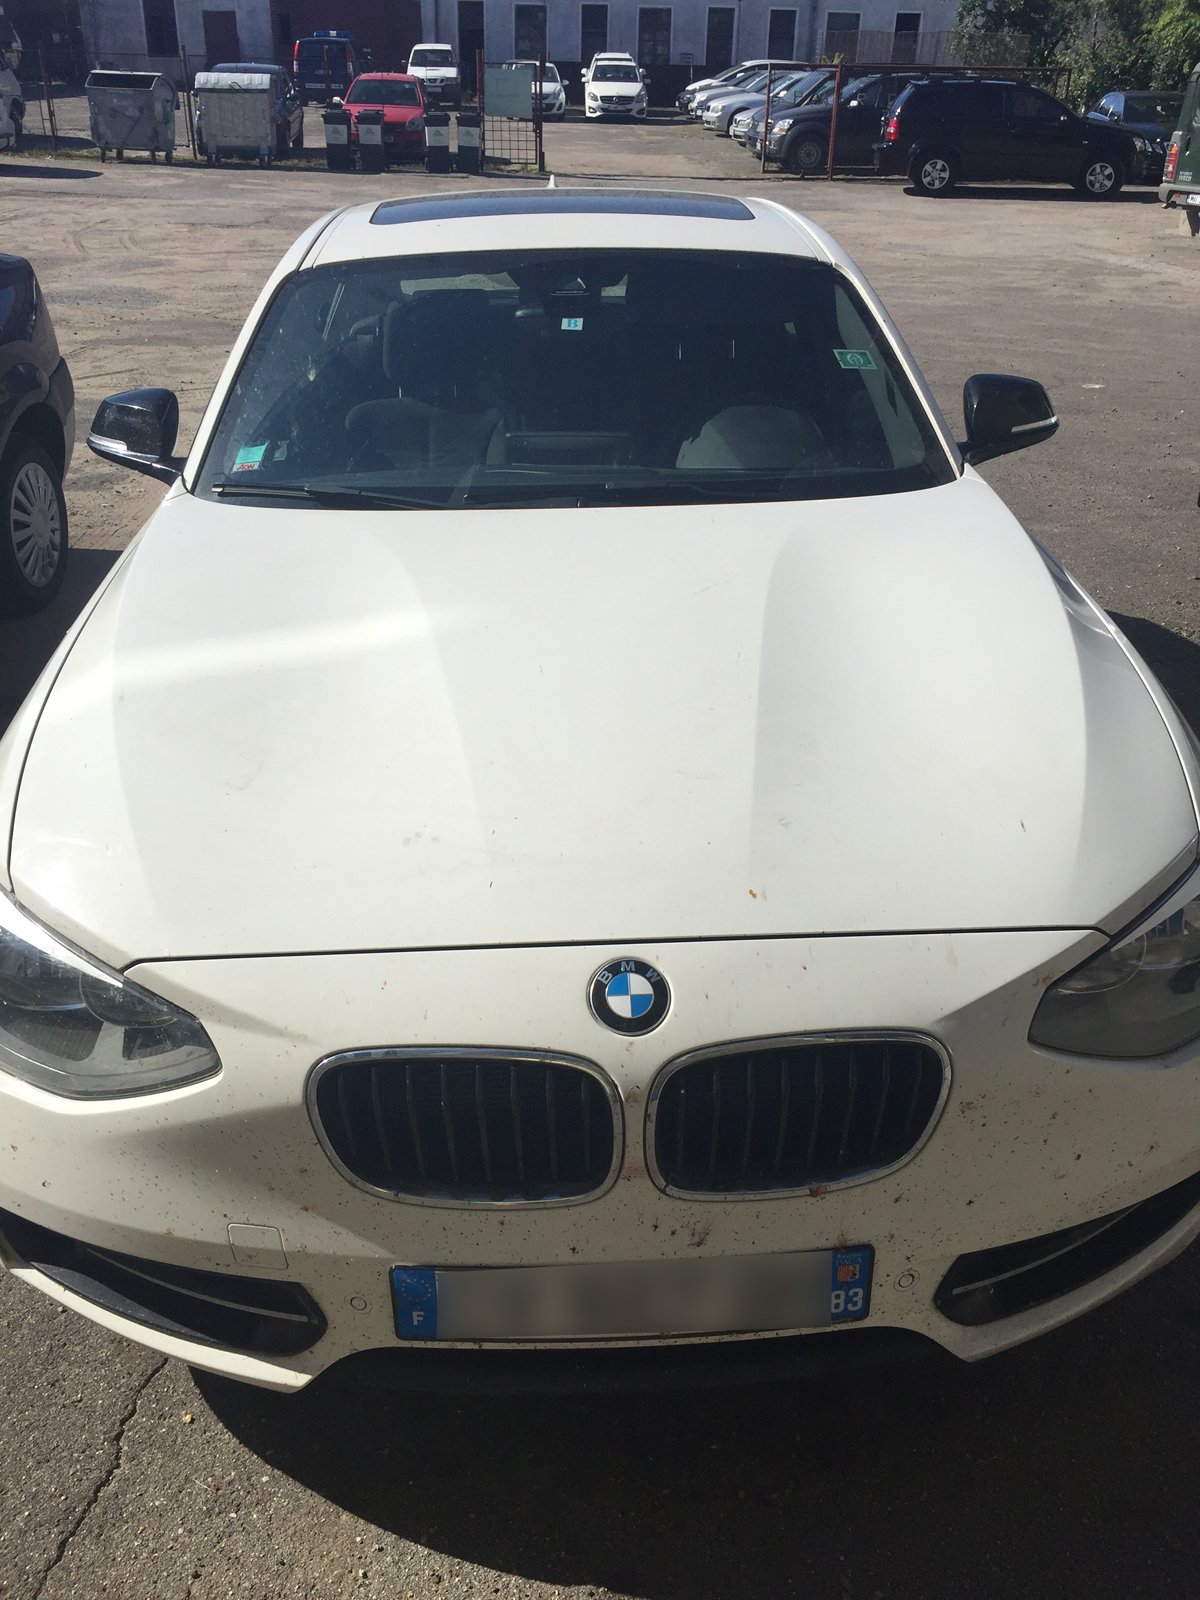 BMW furat din Franţa, găsit în Vama Nădlac